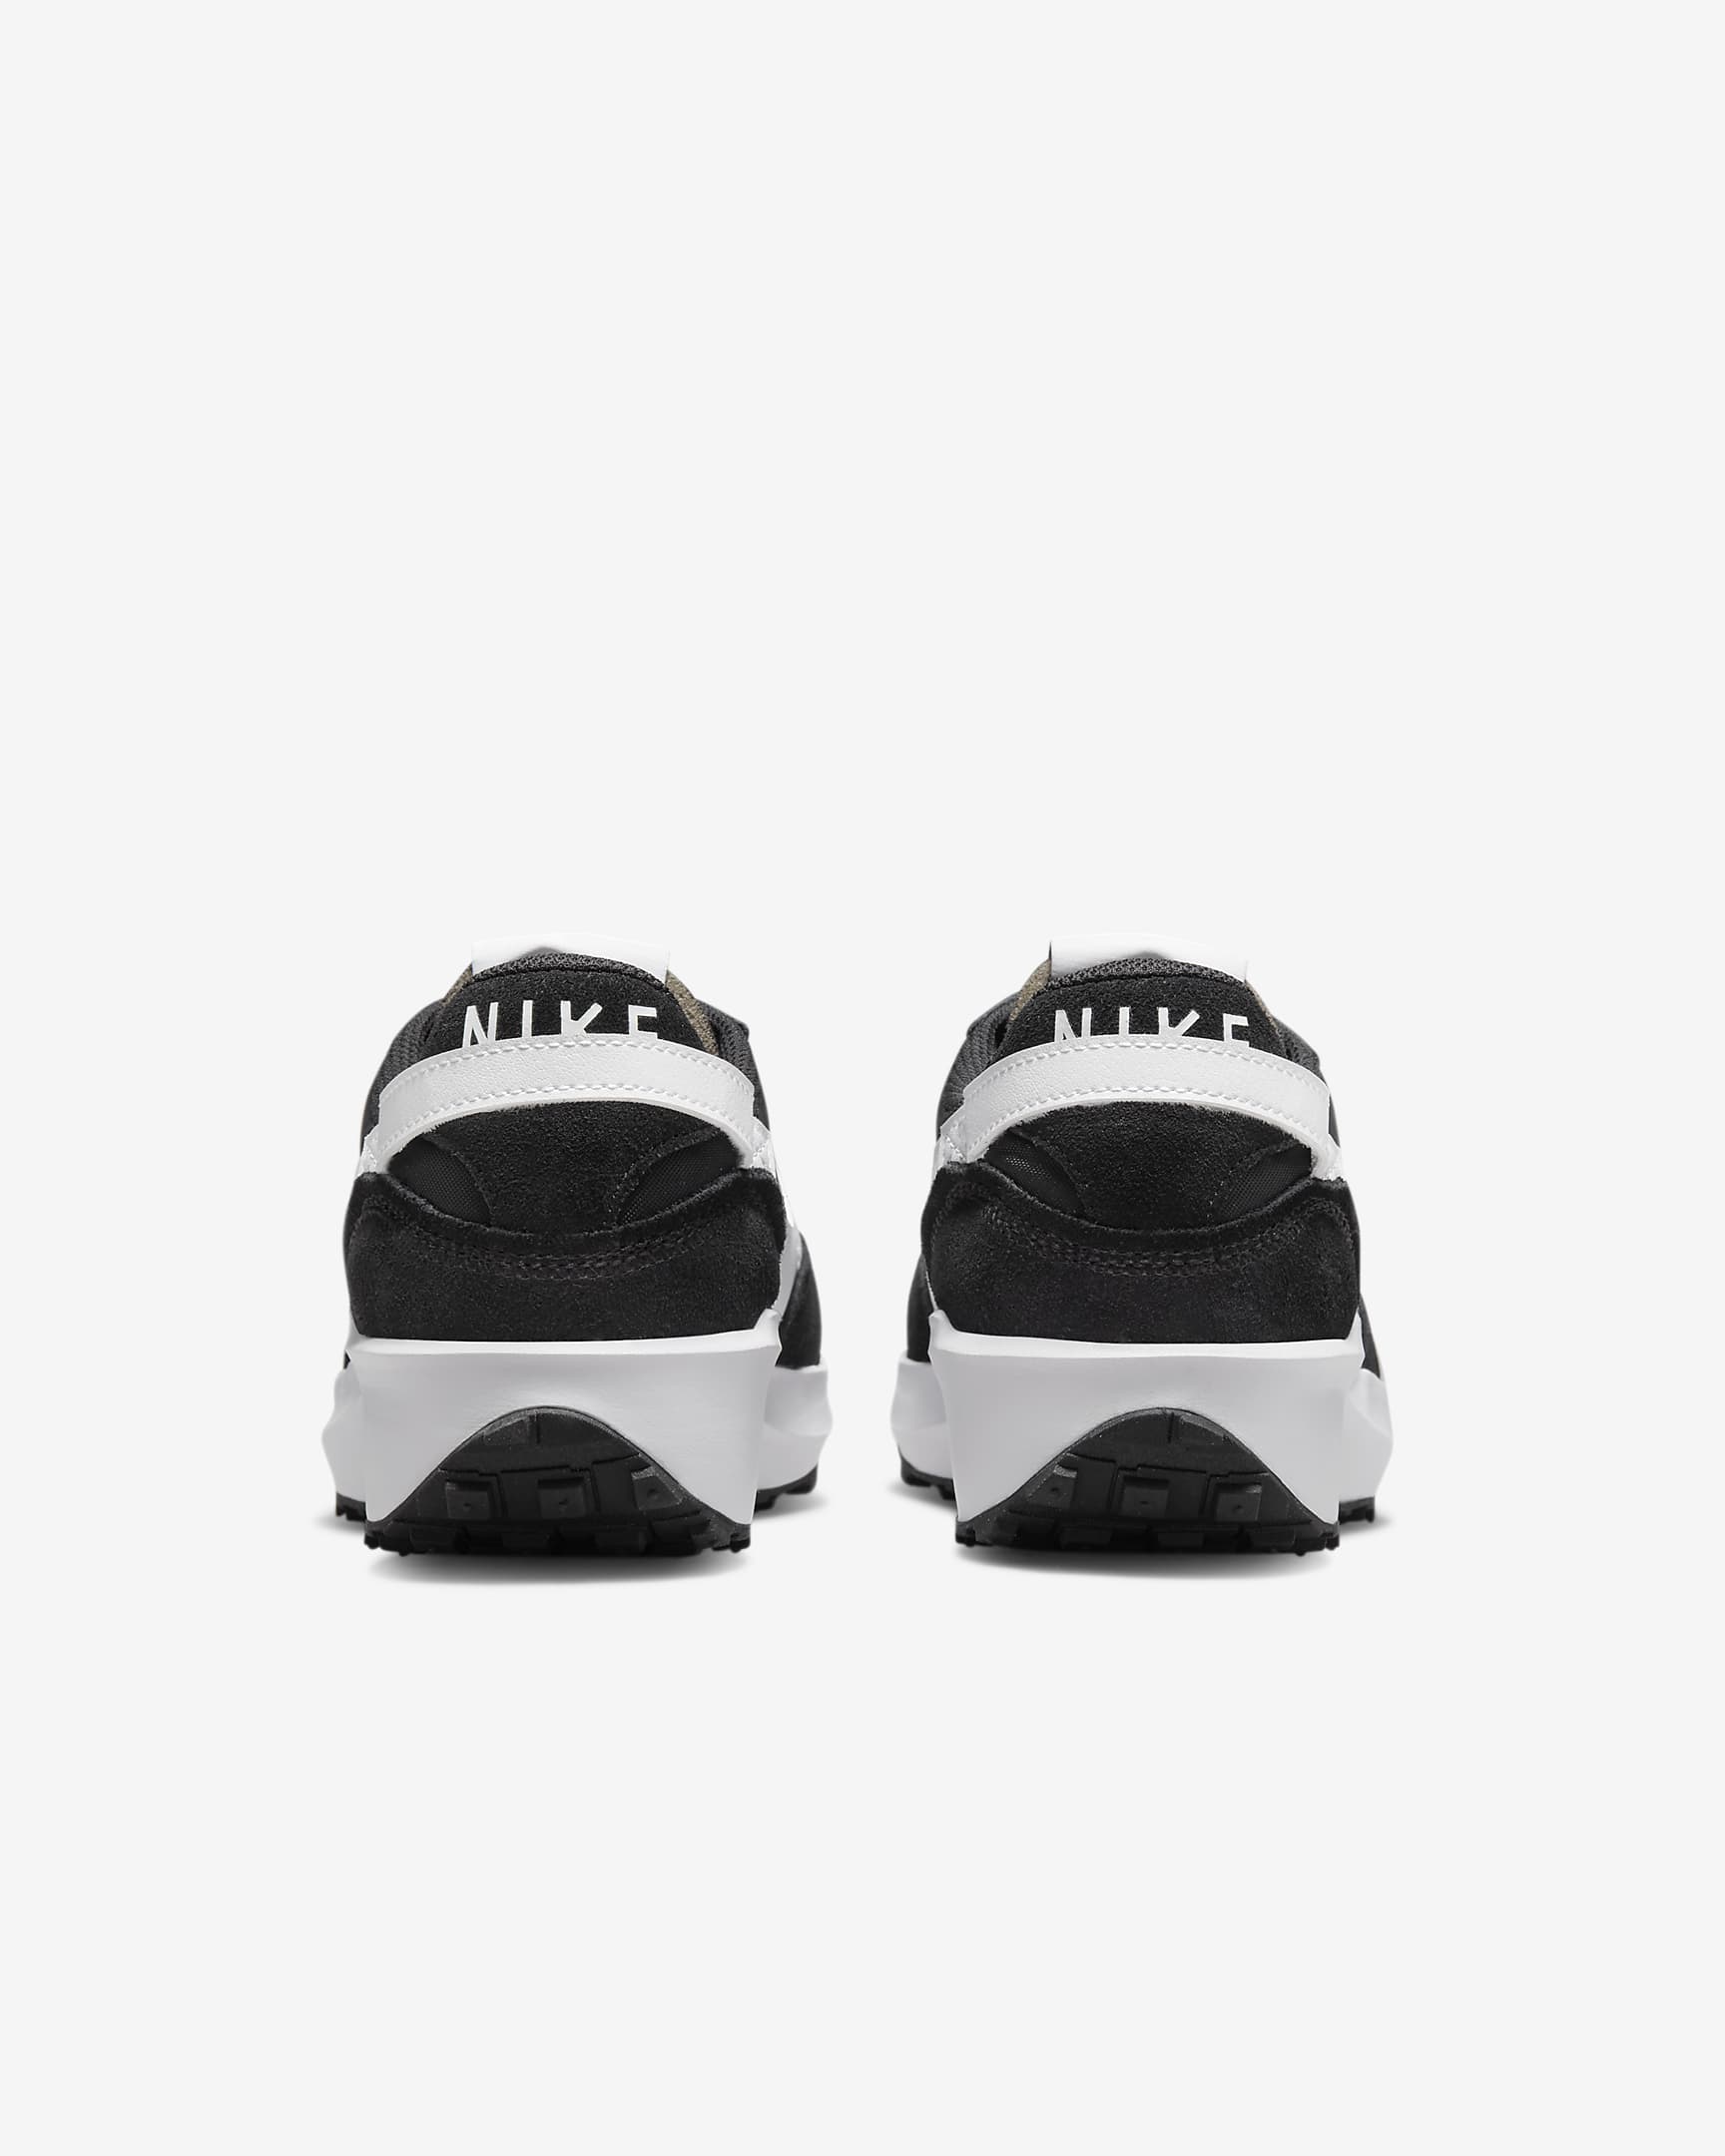 Nike Waffle Debut Zapatillas - Mujer - Negro/Naranja/Transparente/Blanco